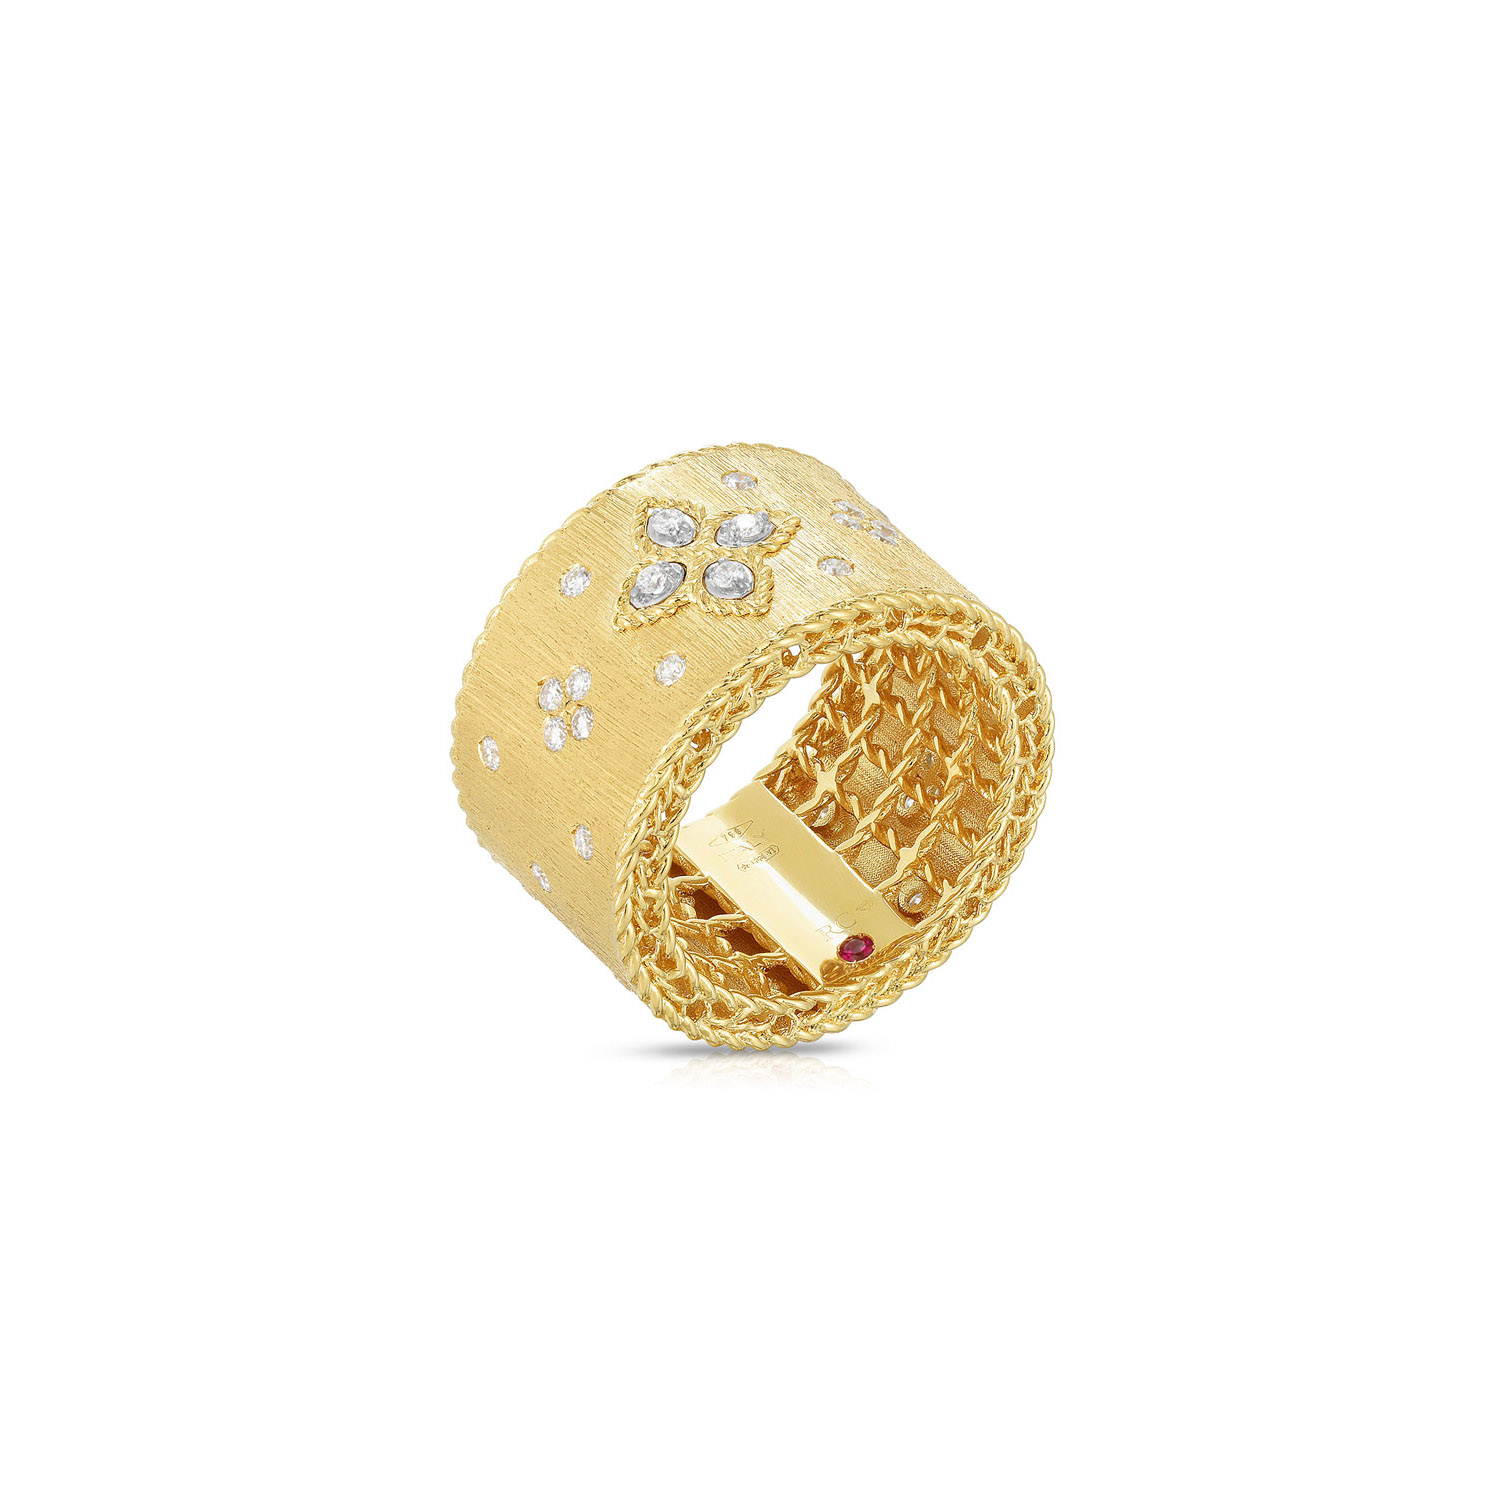 Wholesale OEM/ODM Jewelry Customized 18k Gold Venetian Princess Diamond Ring women’s fine jewelry designer